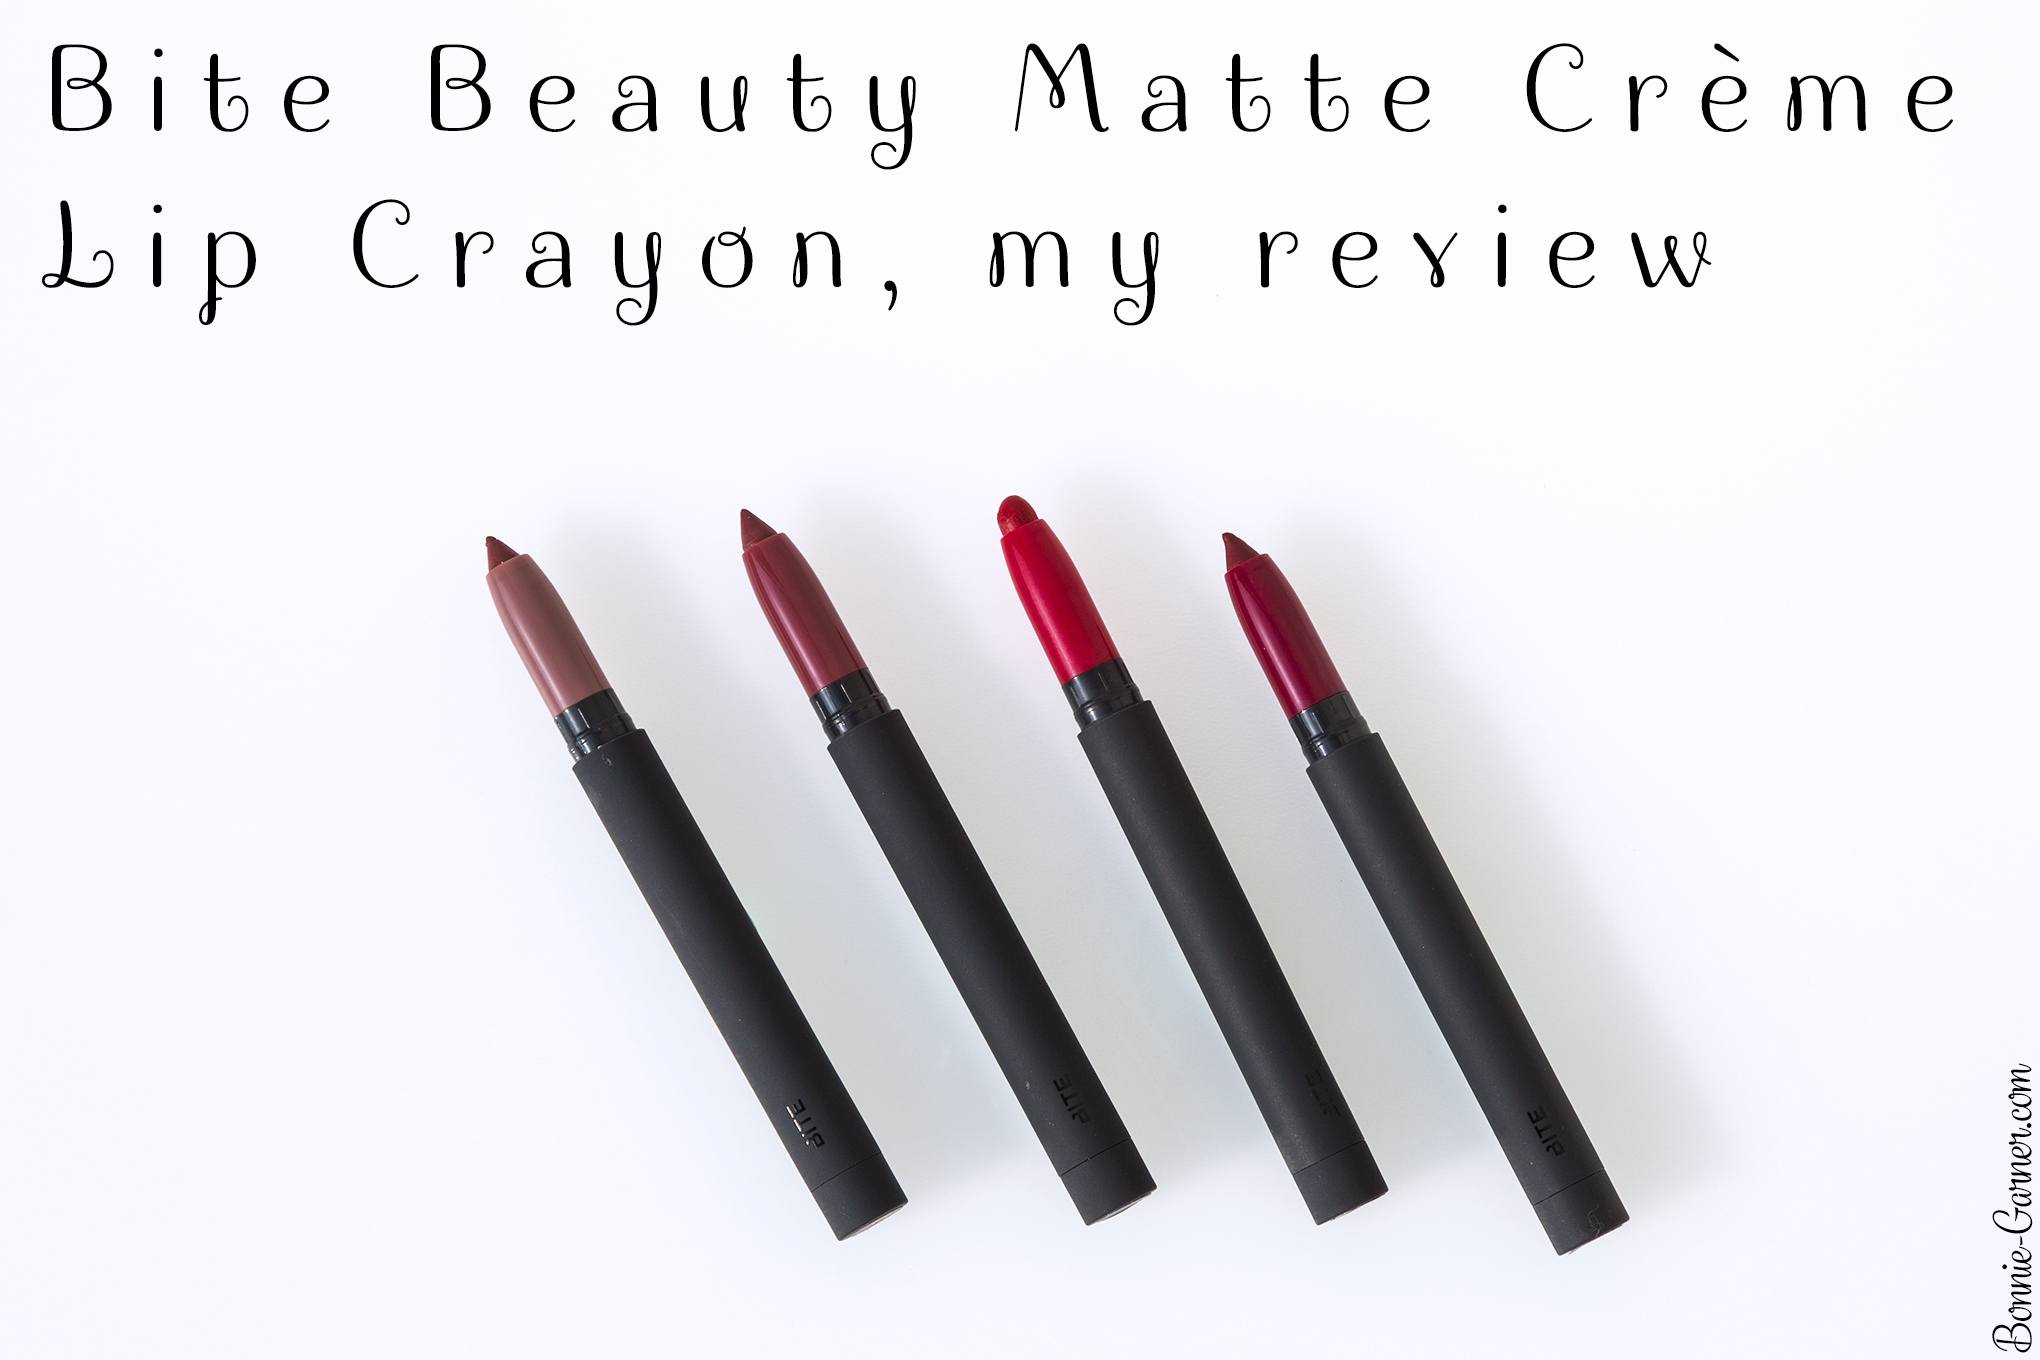 Bite Beauty Matte Crème Lip Crayon, my review